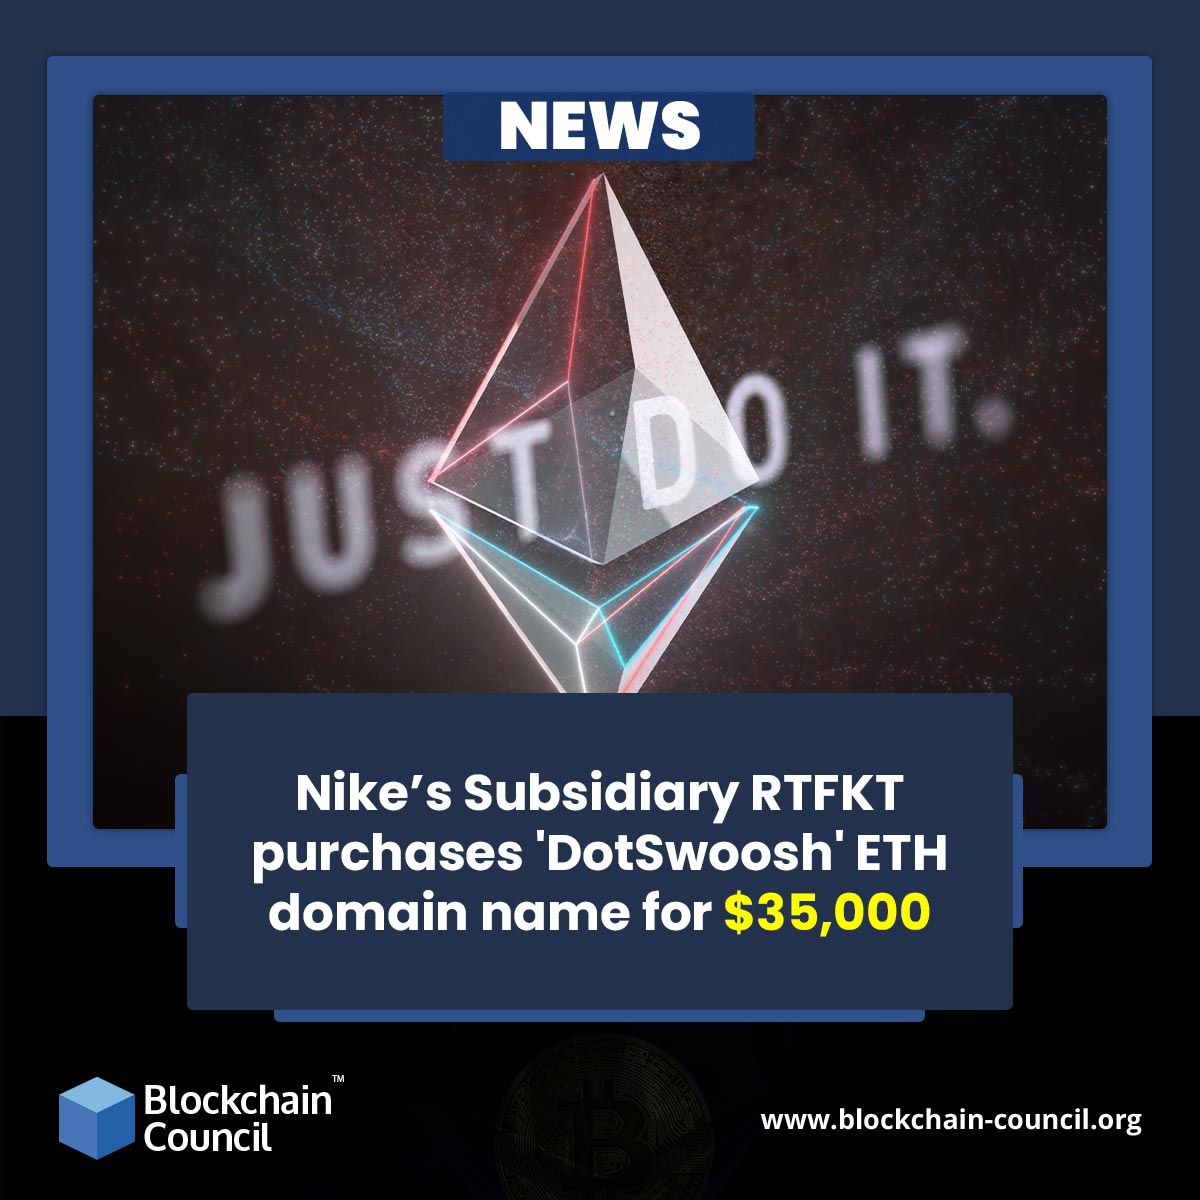 Nike’s Subsidiary RTFKT purchases 'DotSwoosh' ETH domain name for $35,000